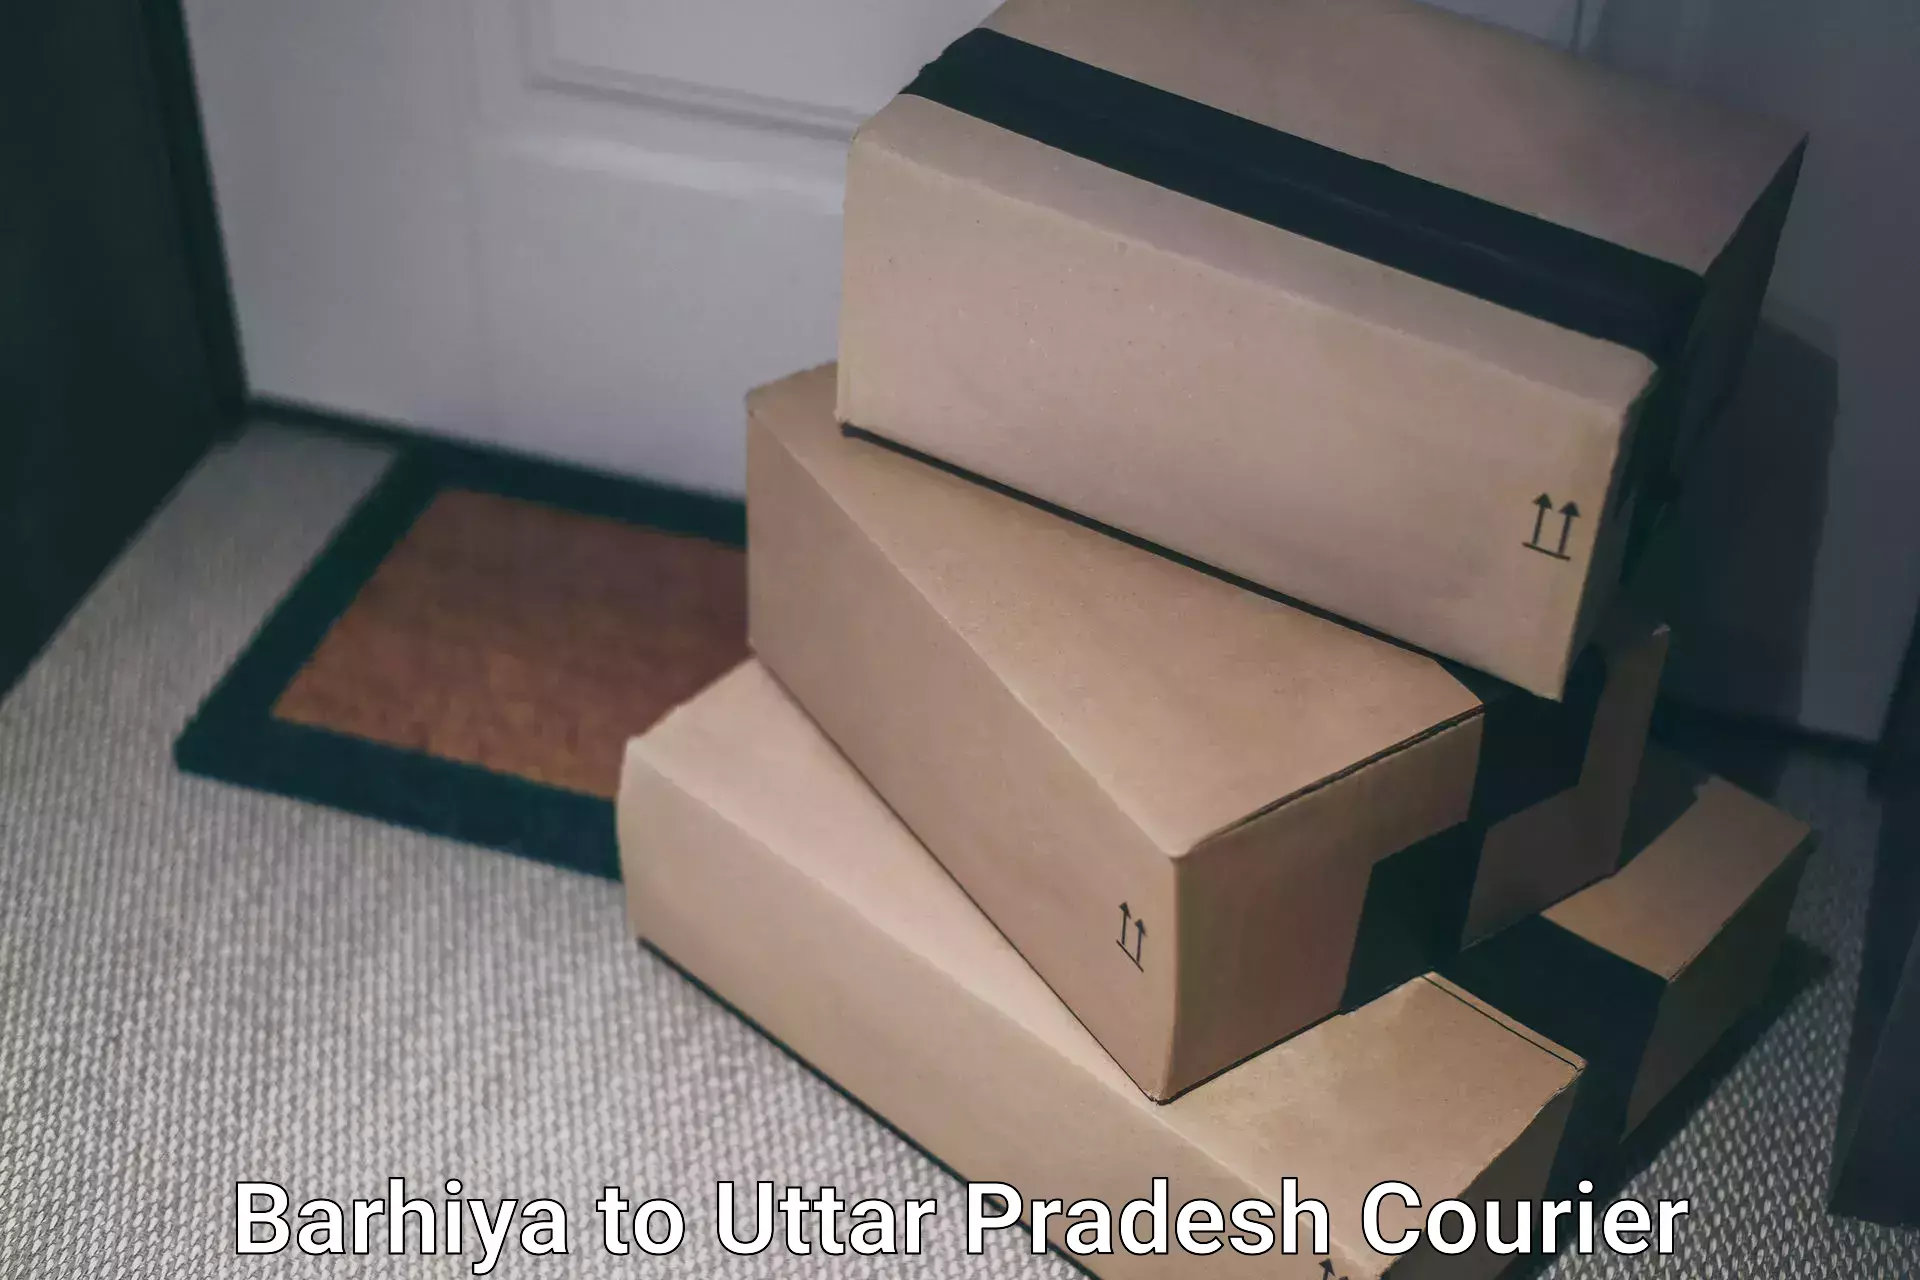 Professional courier handling Barhiya to Aligarh Muslim University